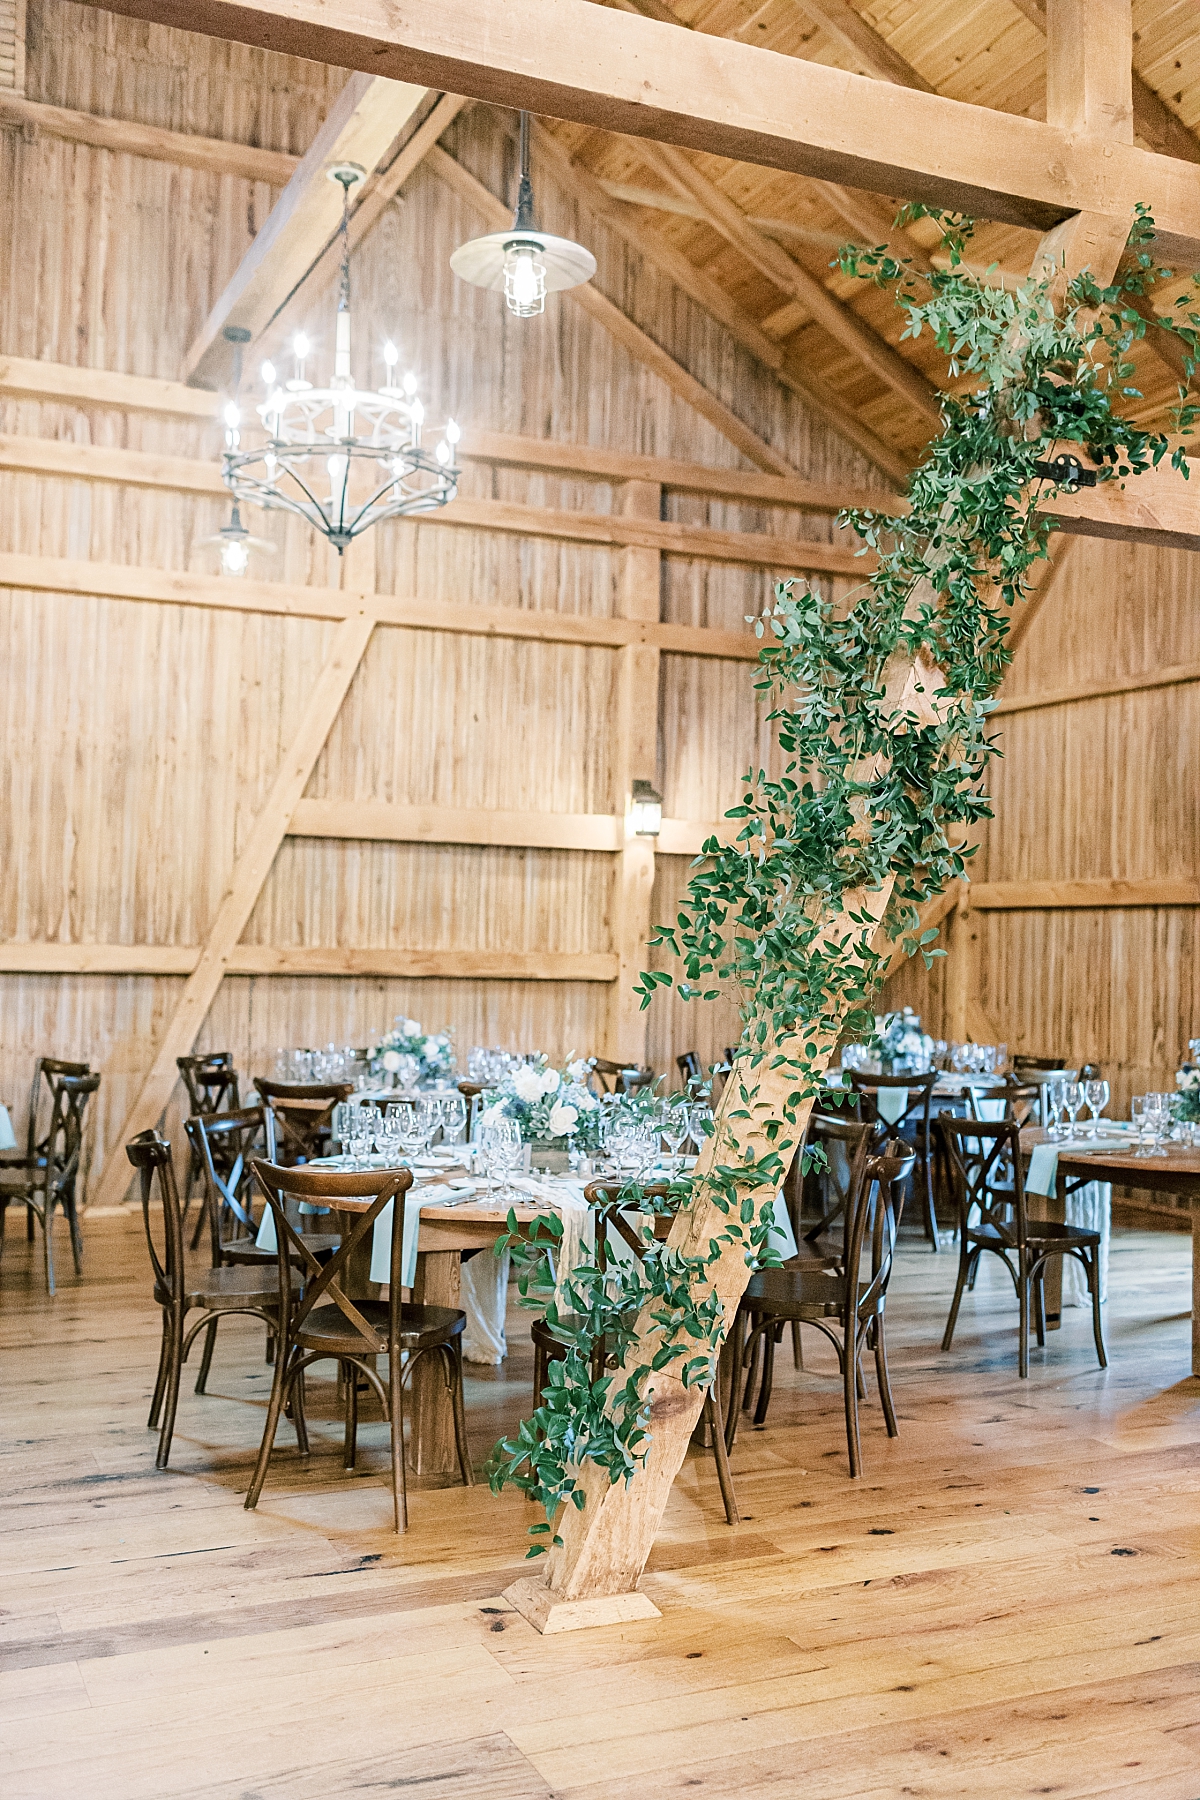 Sarah’s Floral Design ironstone ranch stone gables star barn wedding reception